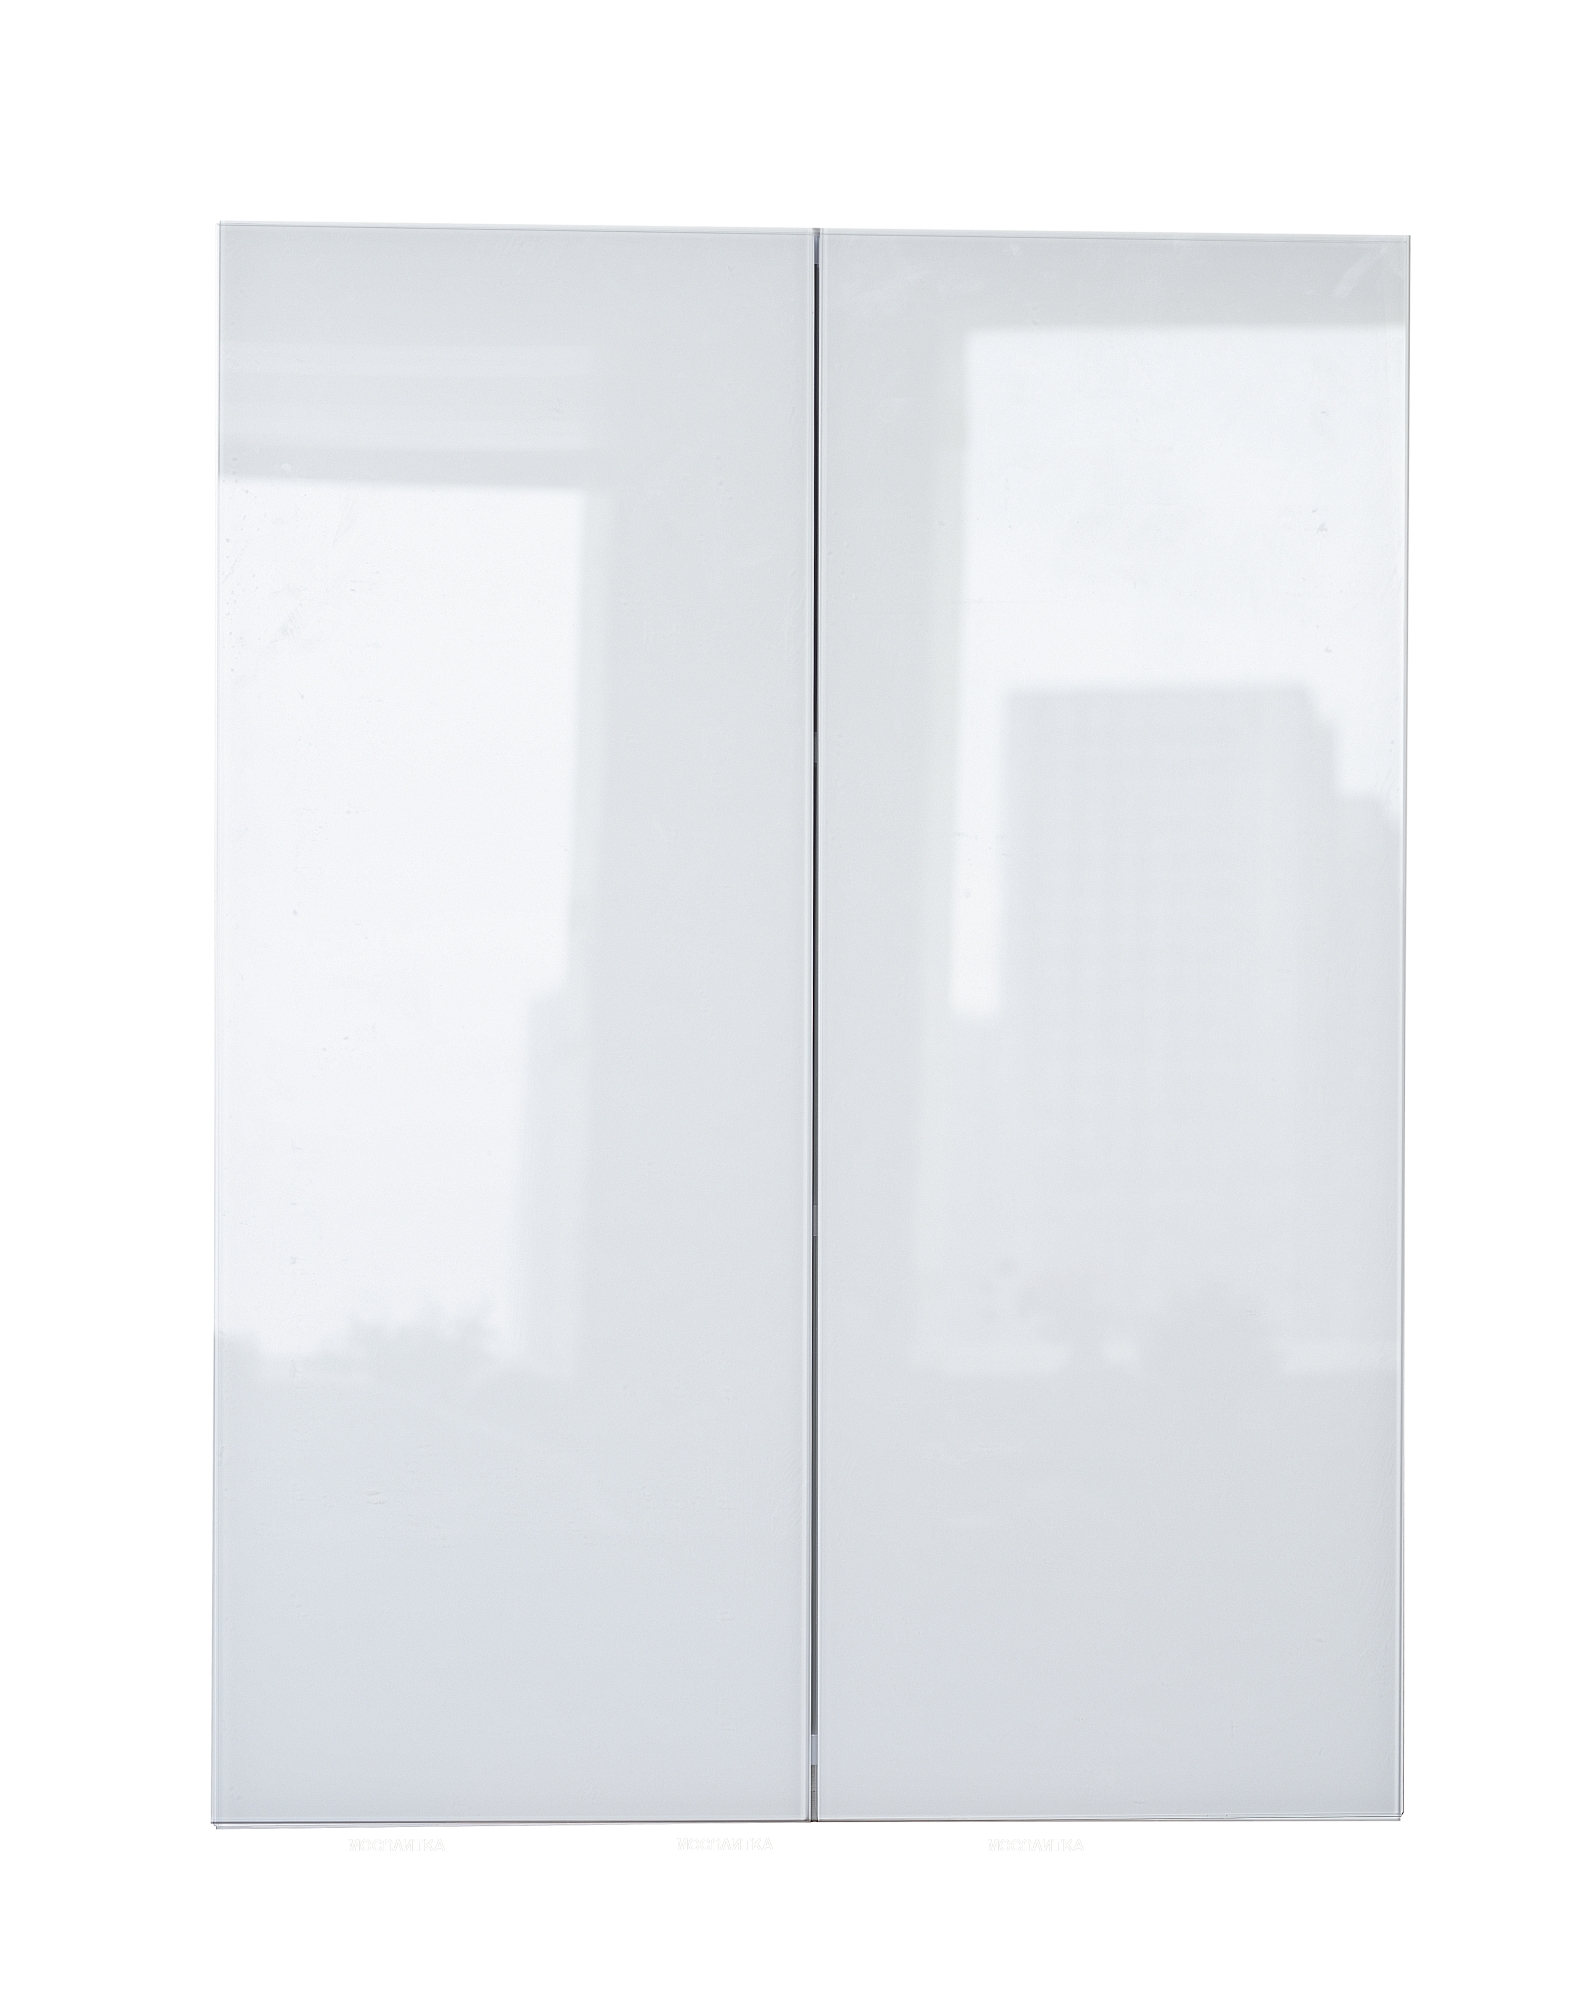 Подвесной шкаф Style Line Даймонд 60х80 СС-00002255 люкс белый - изображение 2